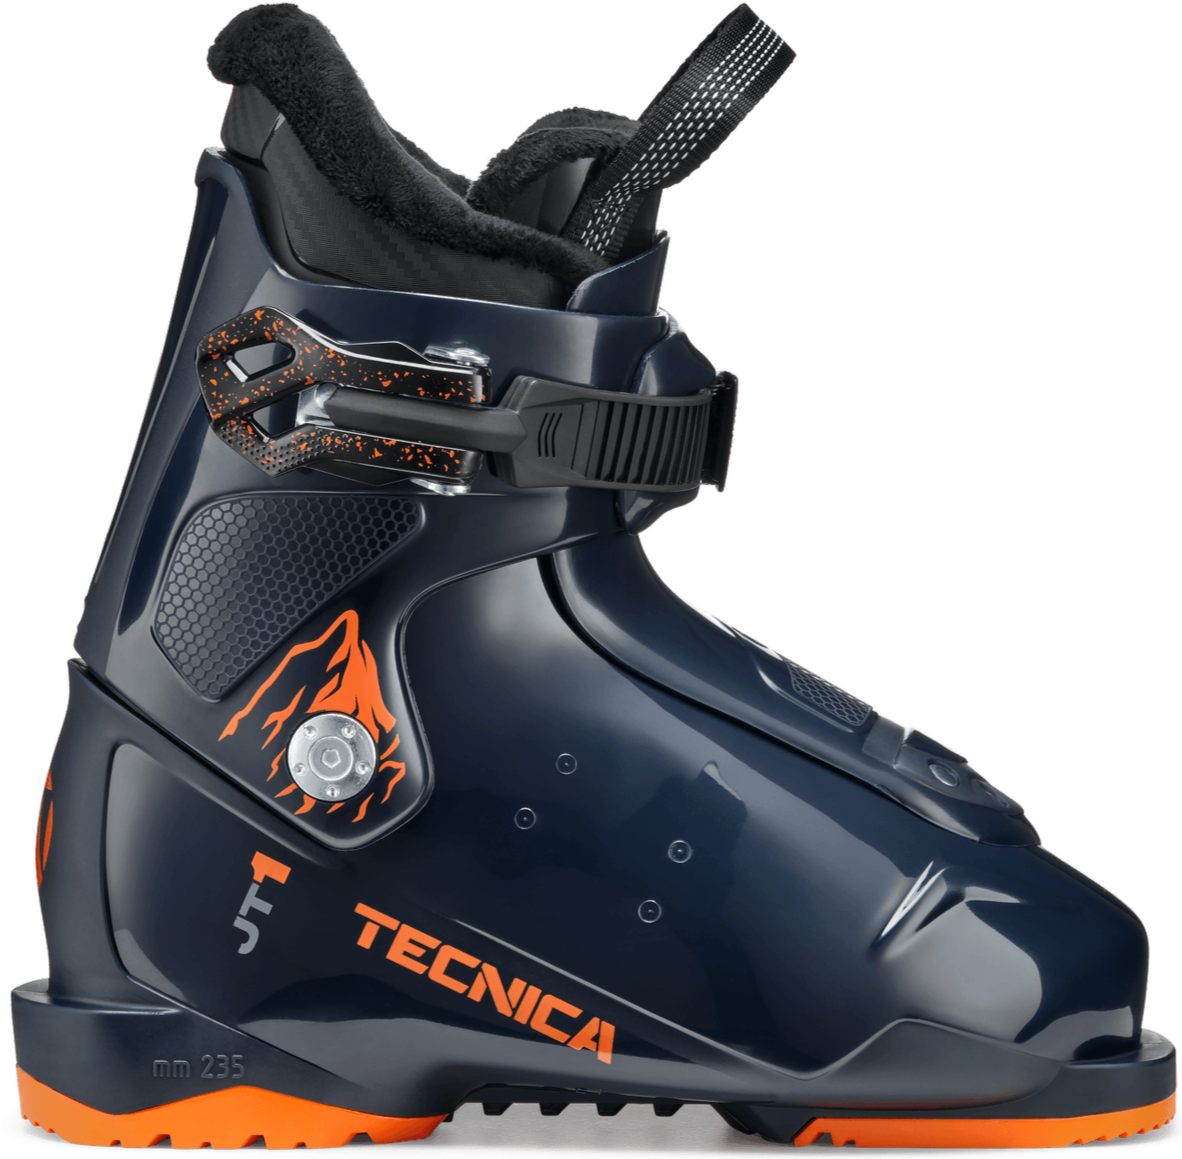 Tecnica, Other, Tecnica Ski Boots